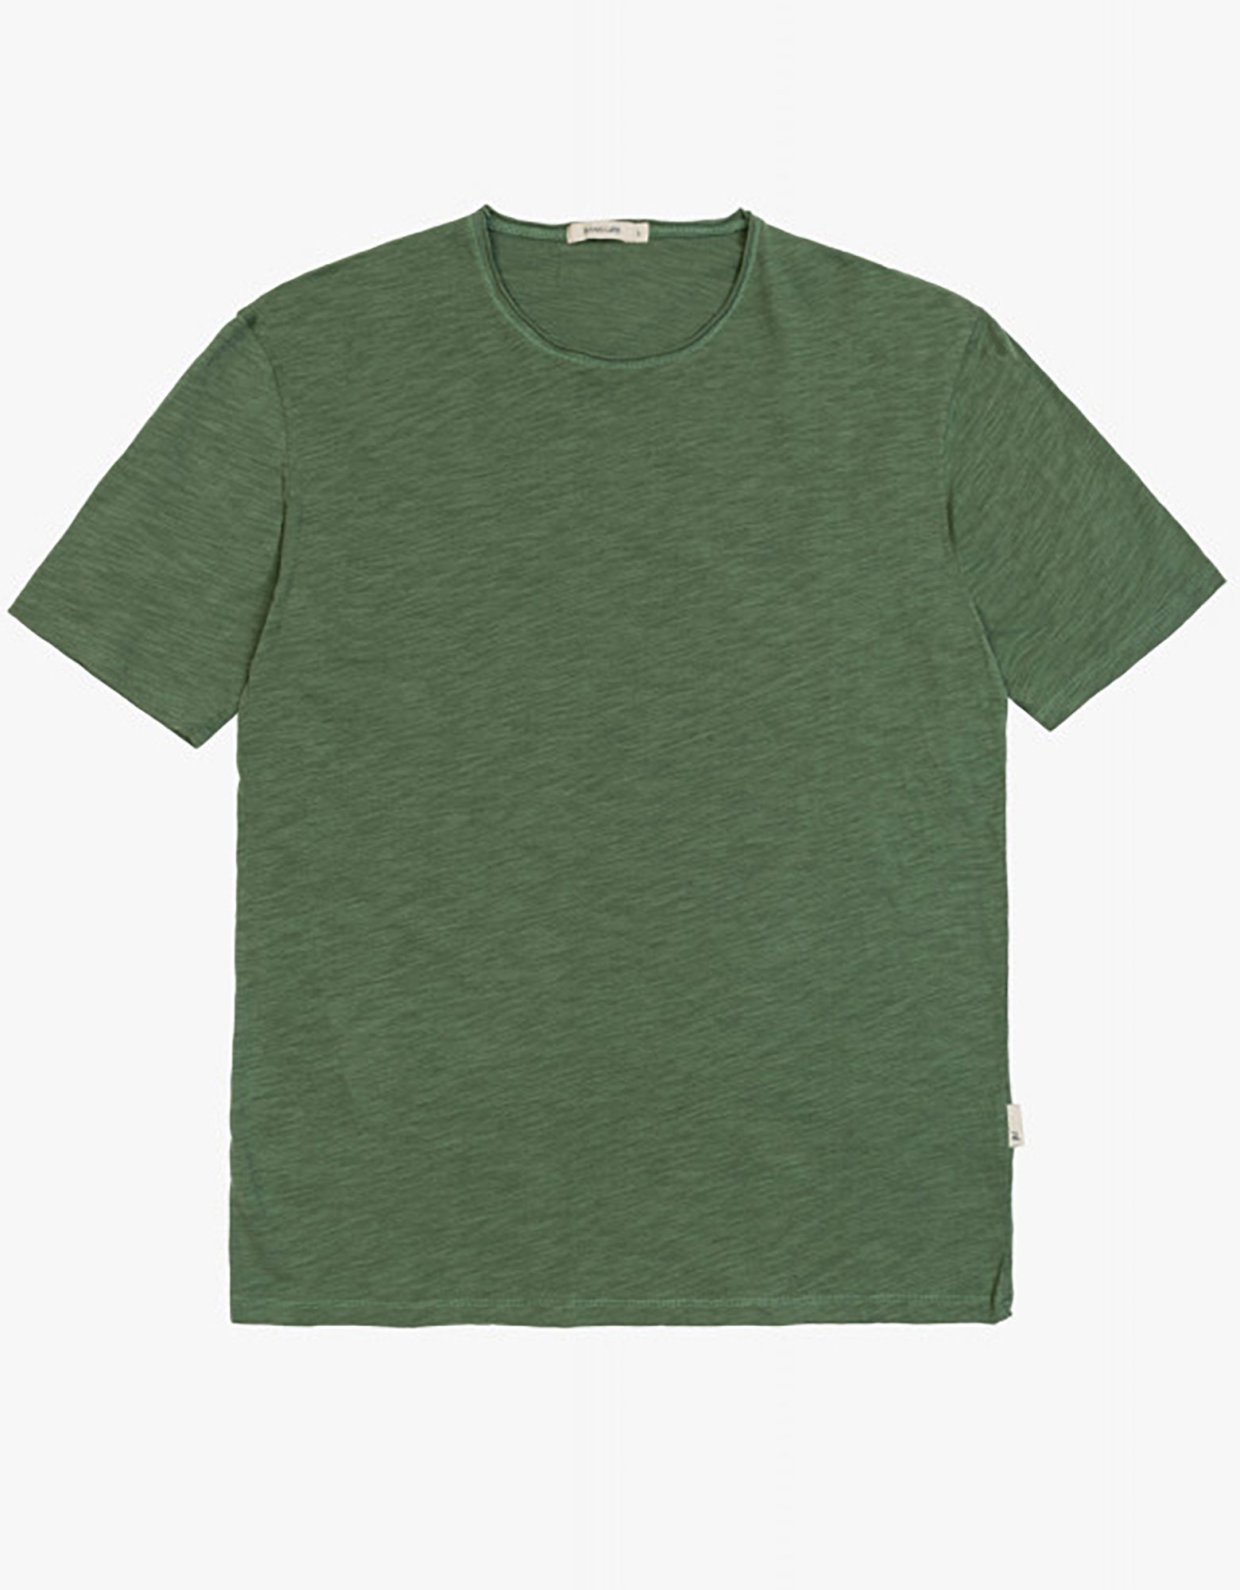 Gianni Lupo T-shirt green